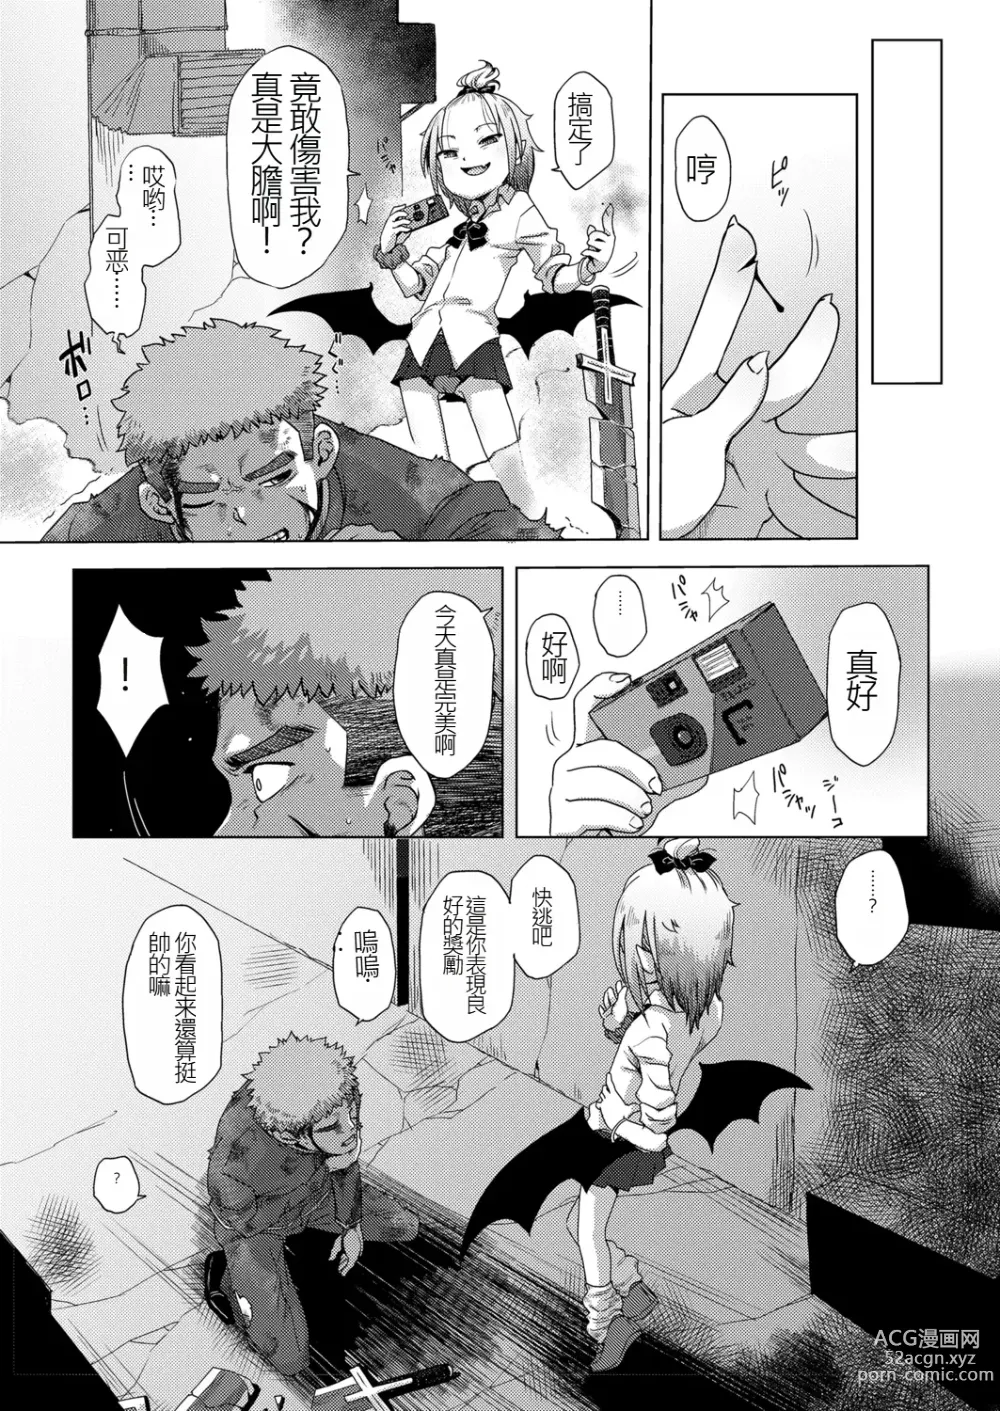 Page 4 of manga ikeike kyuuketuki no×× zizyou